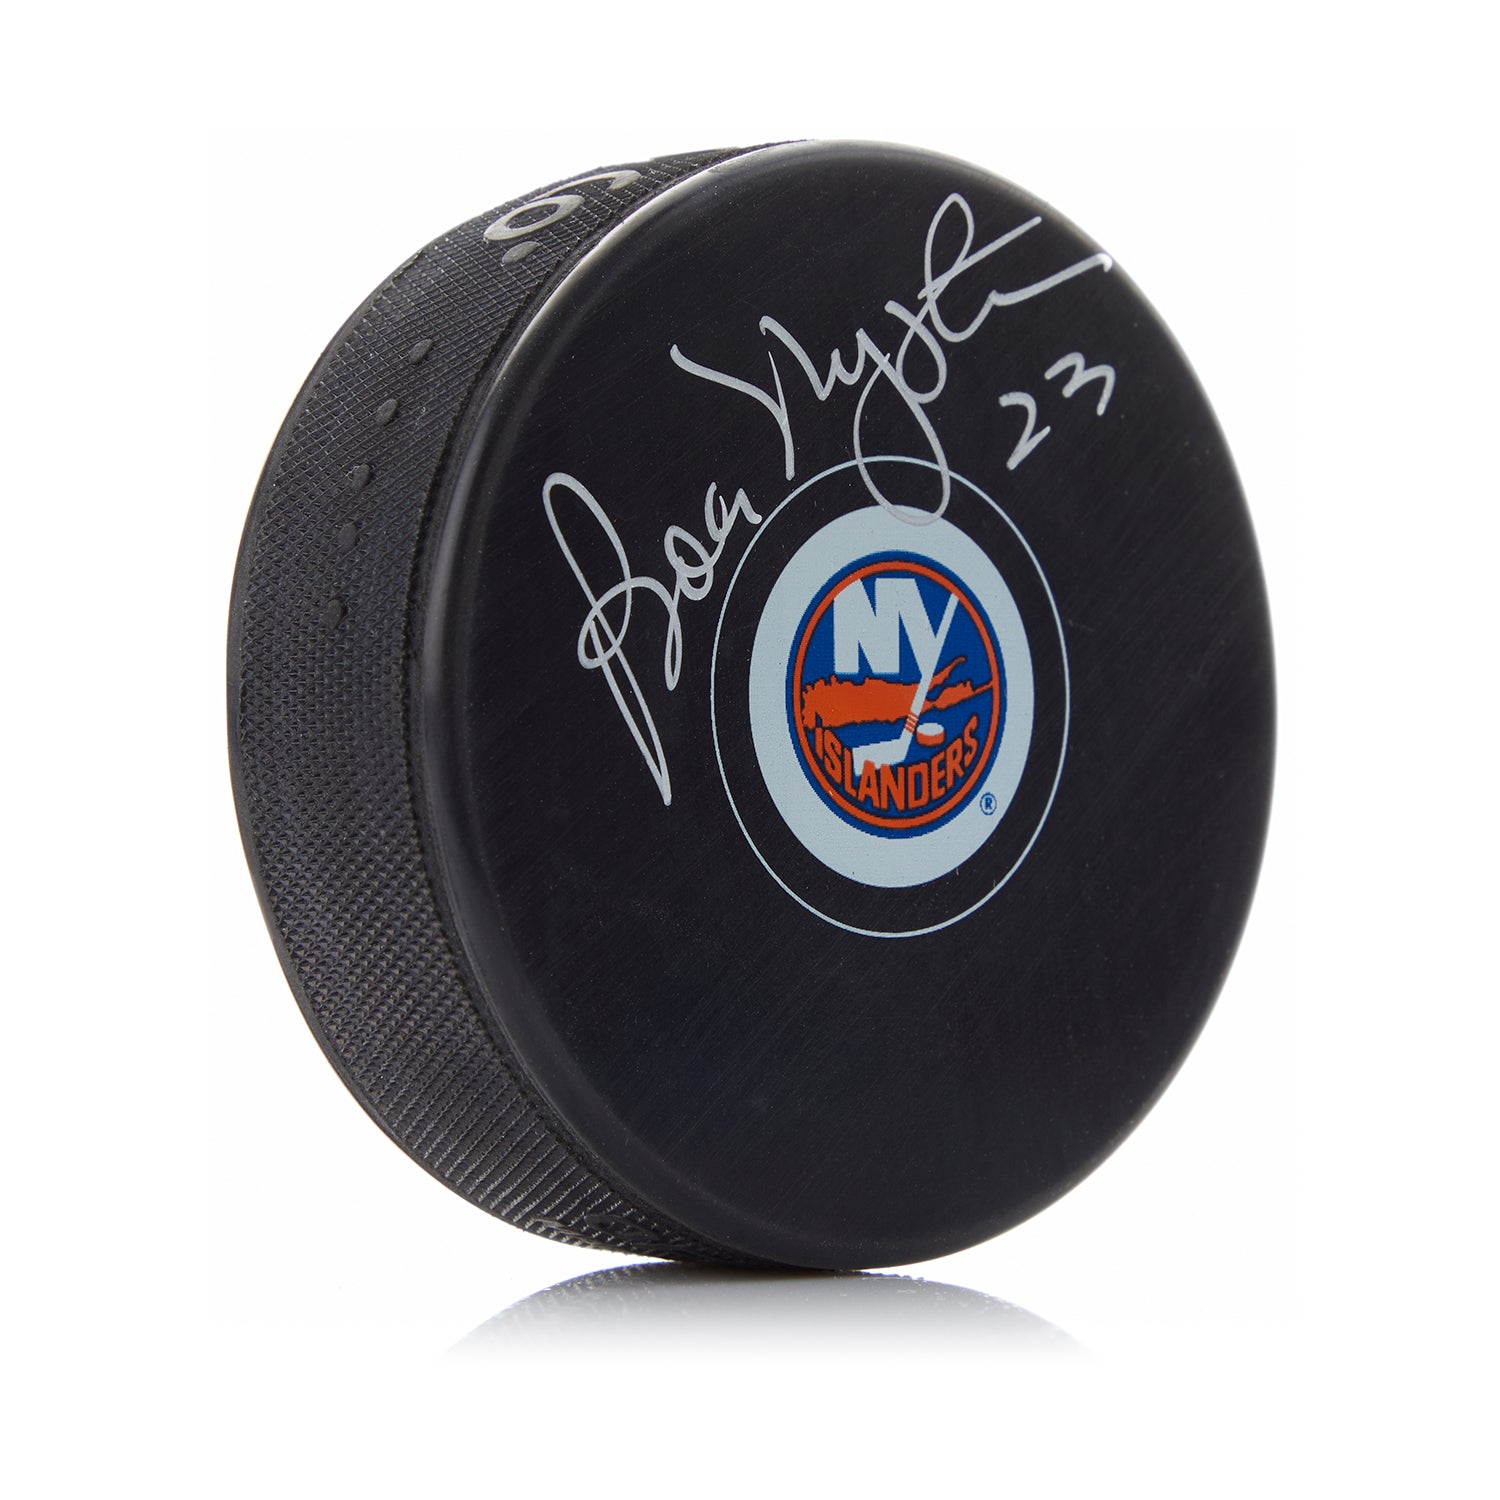 Bob Nystrom Autographed New York Islanders Hockey Puck